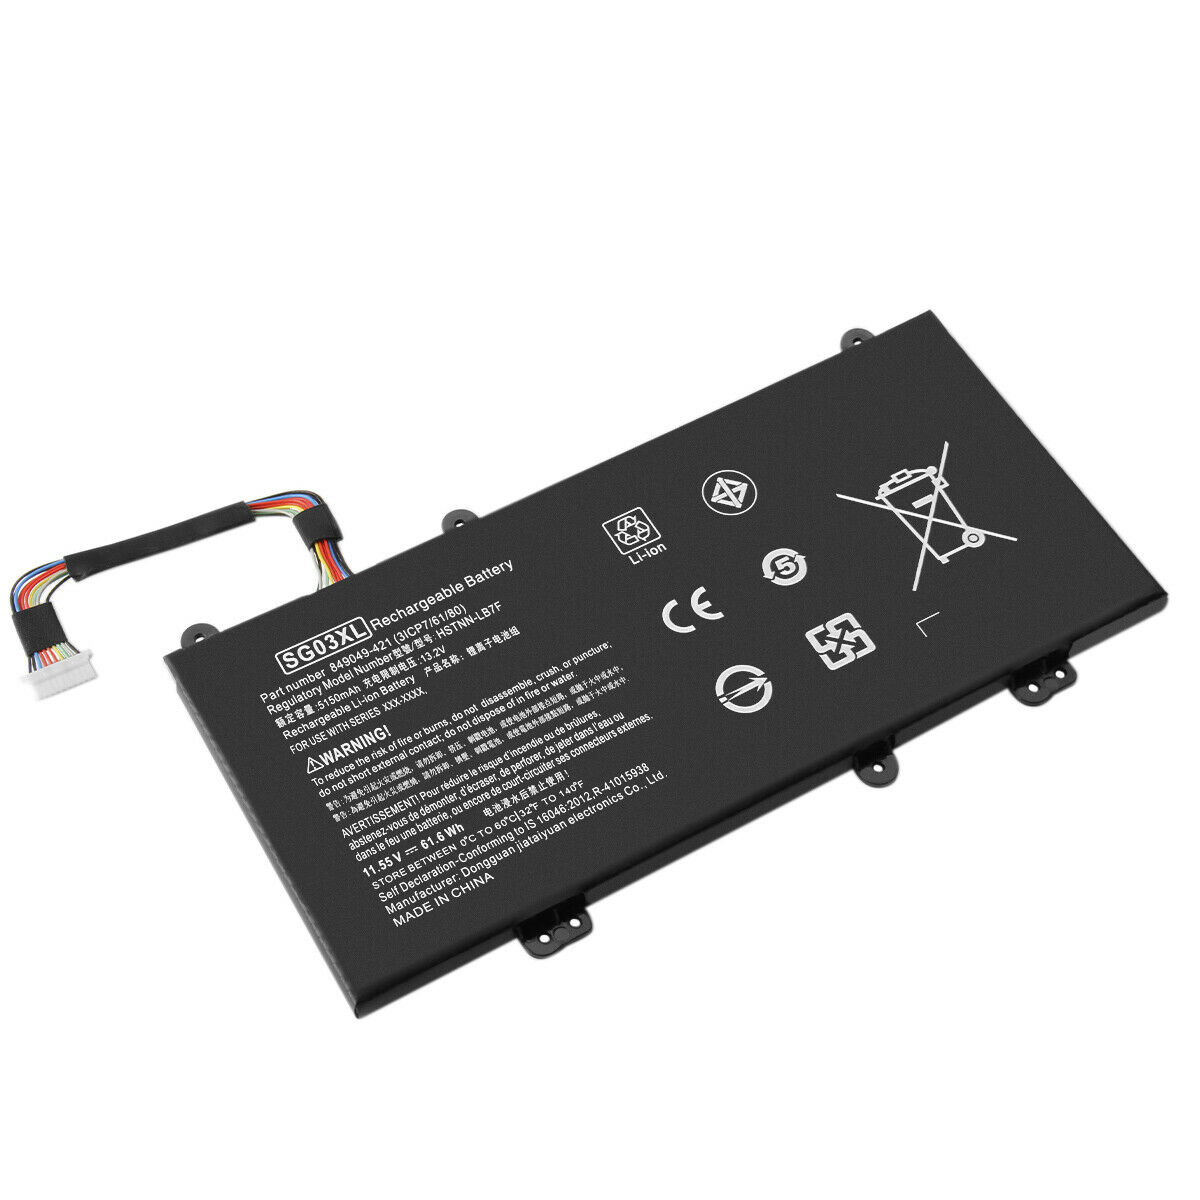 Batteri til SG03XL HP ENVY 17-U011NR M7-U109DX 17-u163cl 17-u175nr 17-u153nr (kompatibelt)